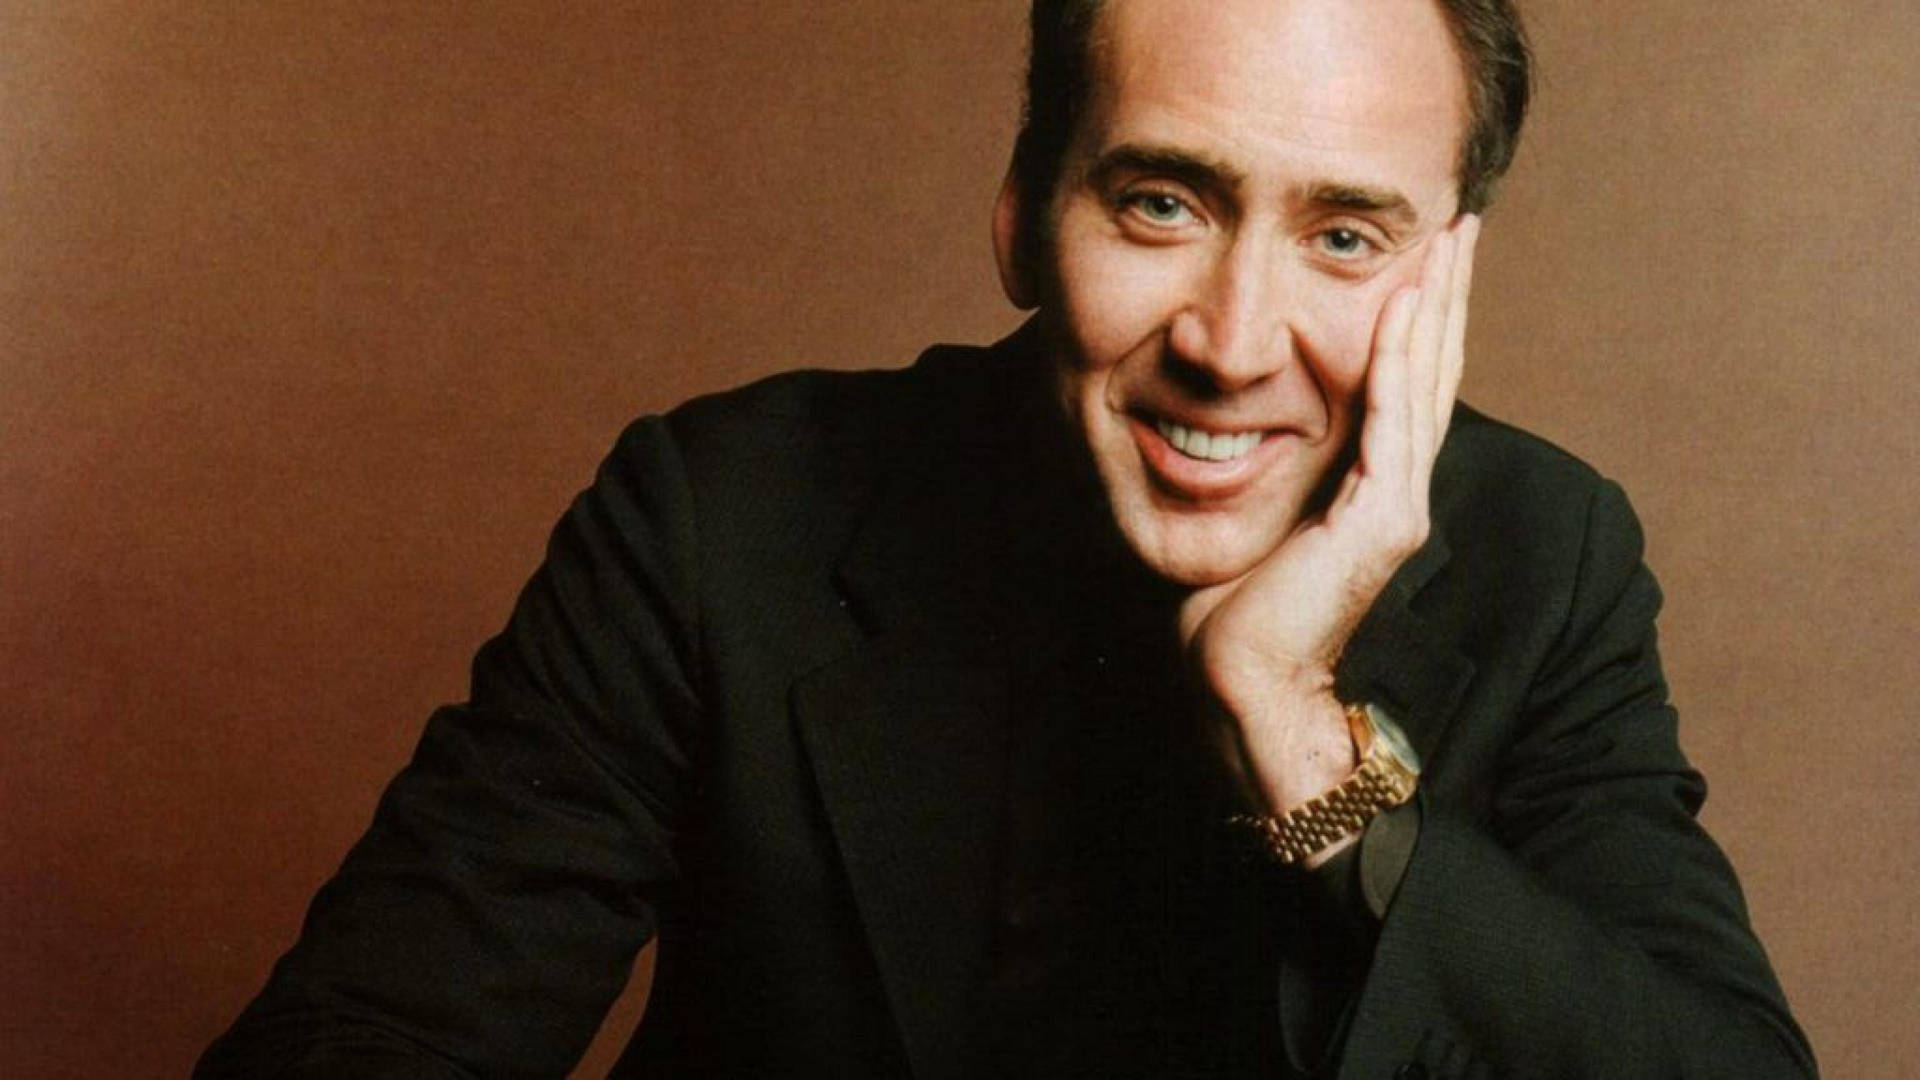 Nicolas Cage Celebrity Portrait Wallpaper